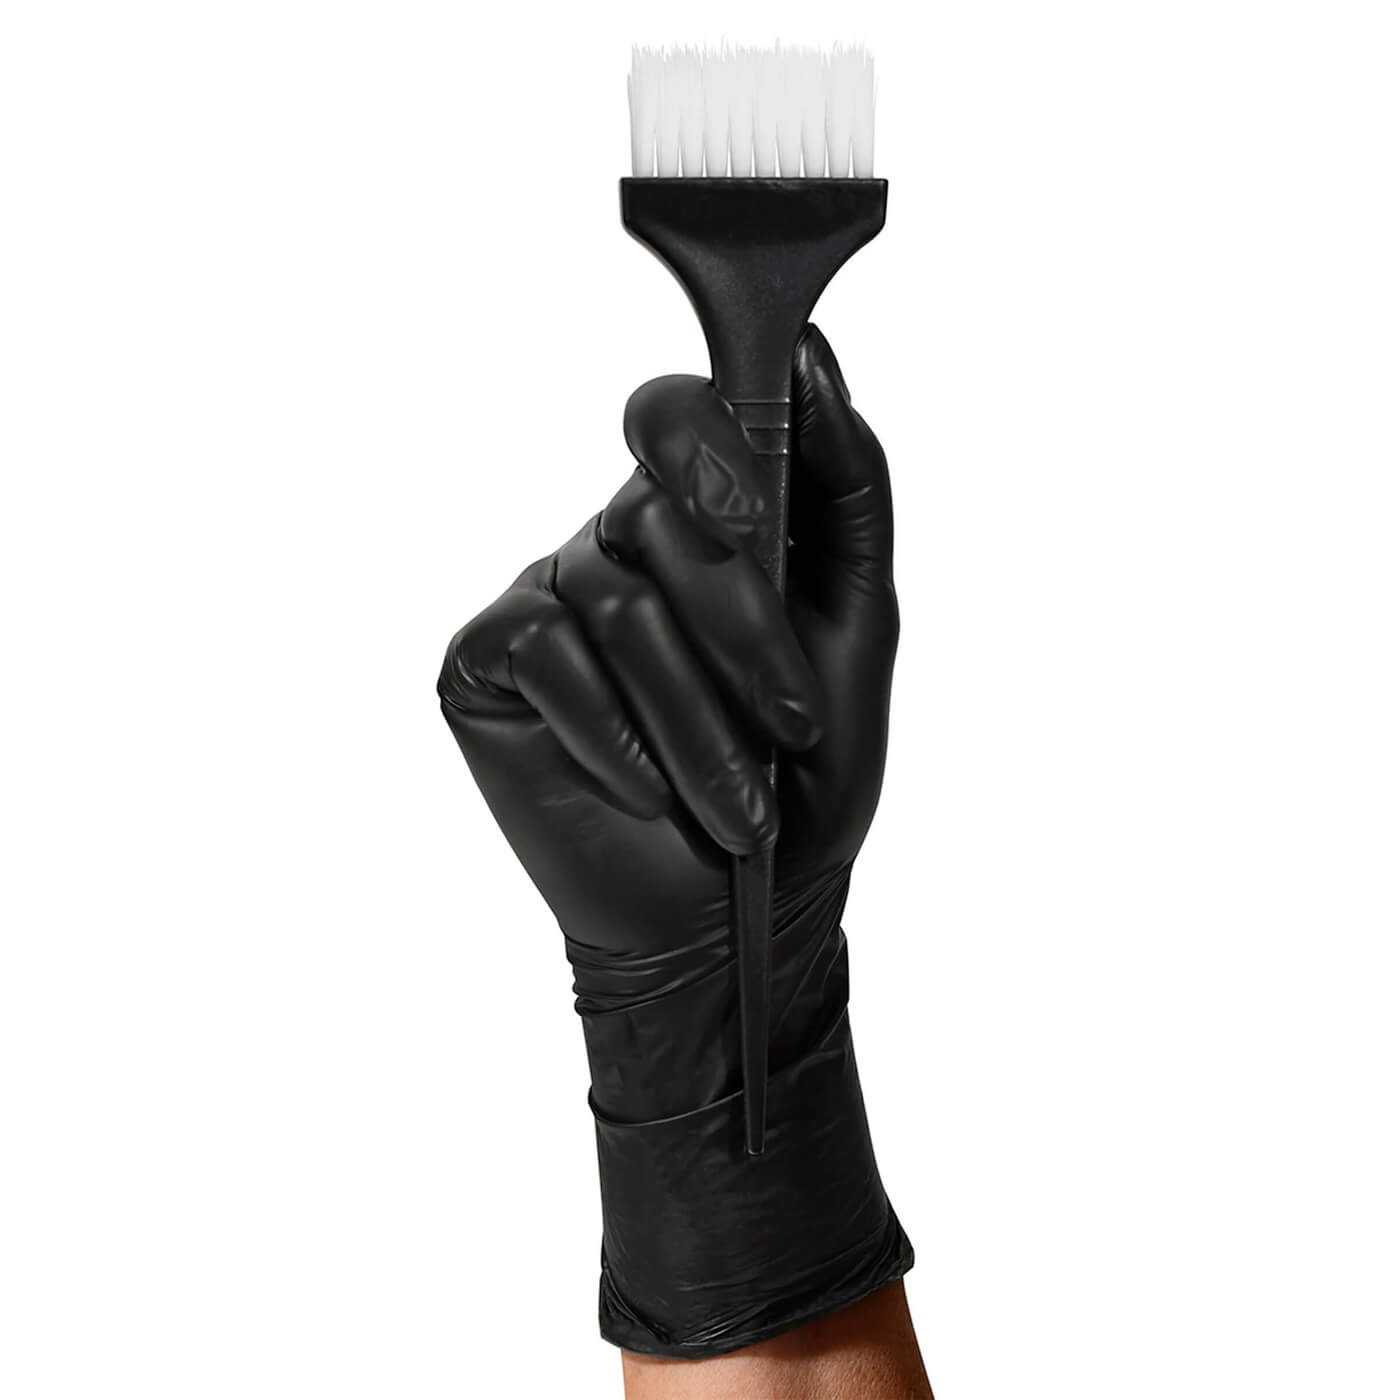 BVGPF-100M Extended Cuff Colorist Gloves Medium